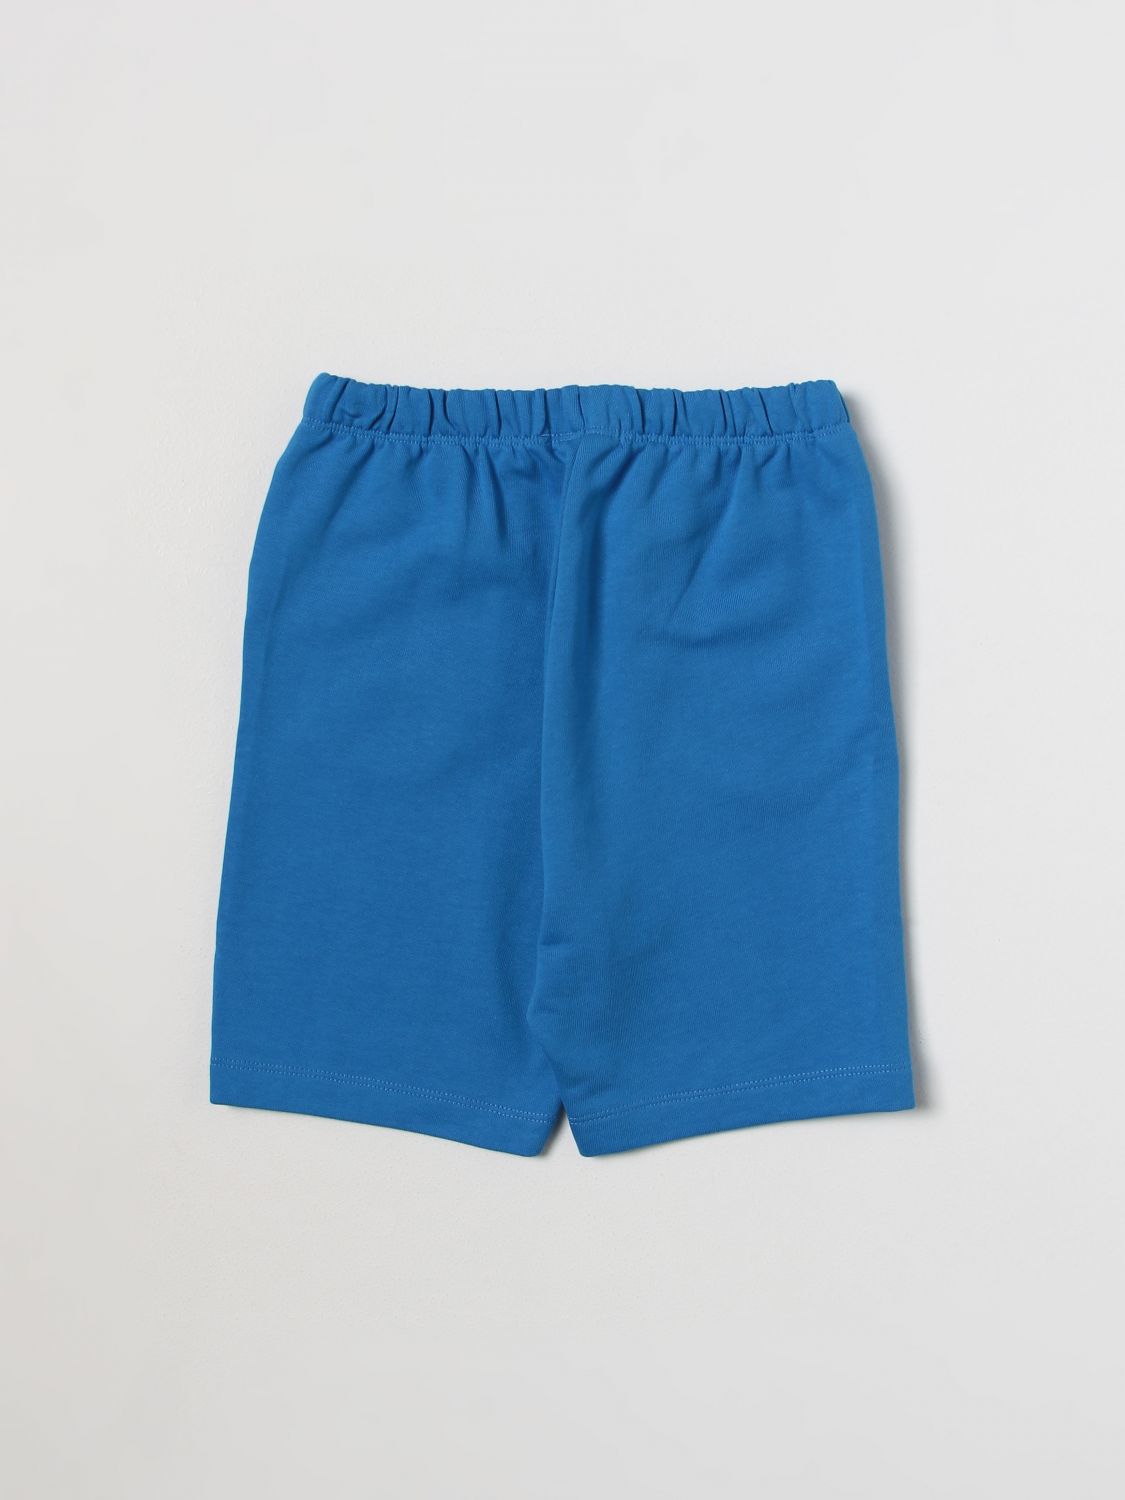 CALVIN KLEIN JEANS: shorts for boys - Blue | Calvin Klein Jeans shorts ...